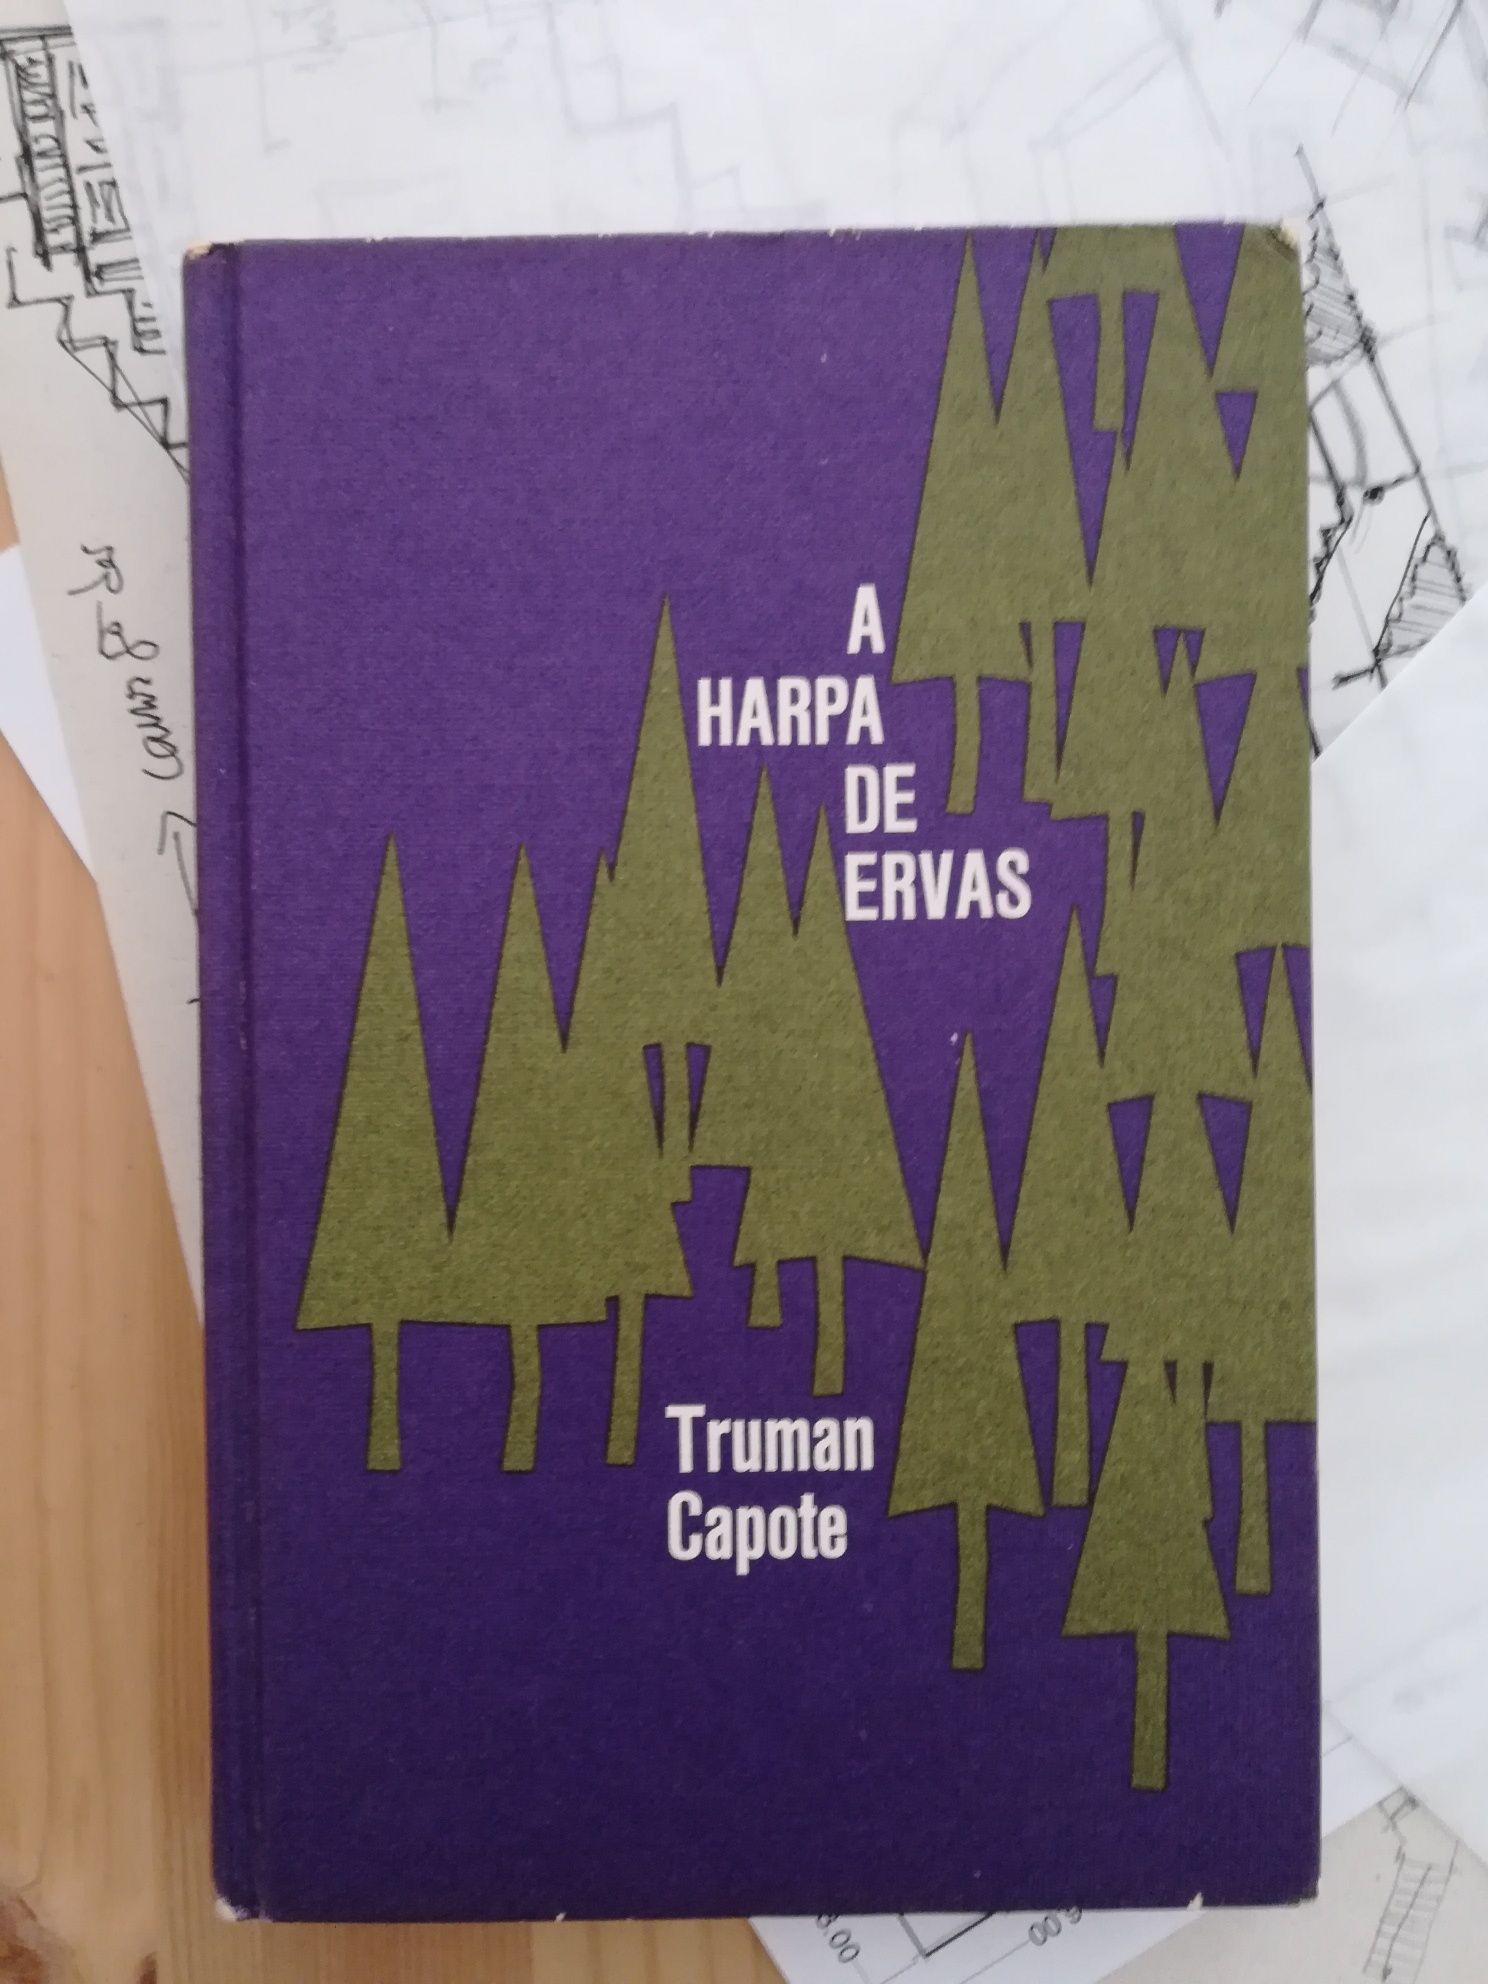 A harpa de ervas - Truman Capote